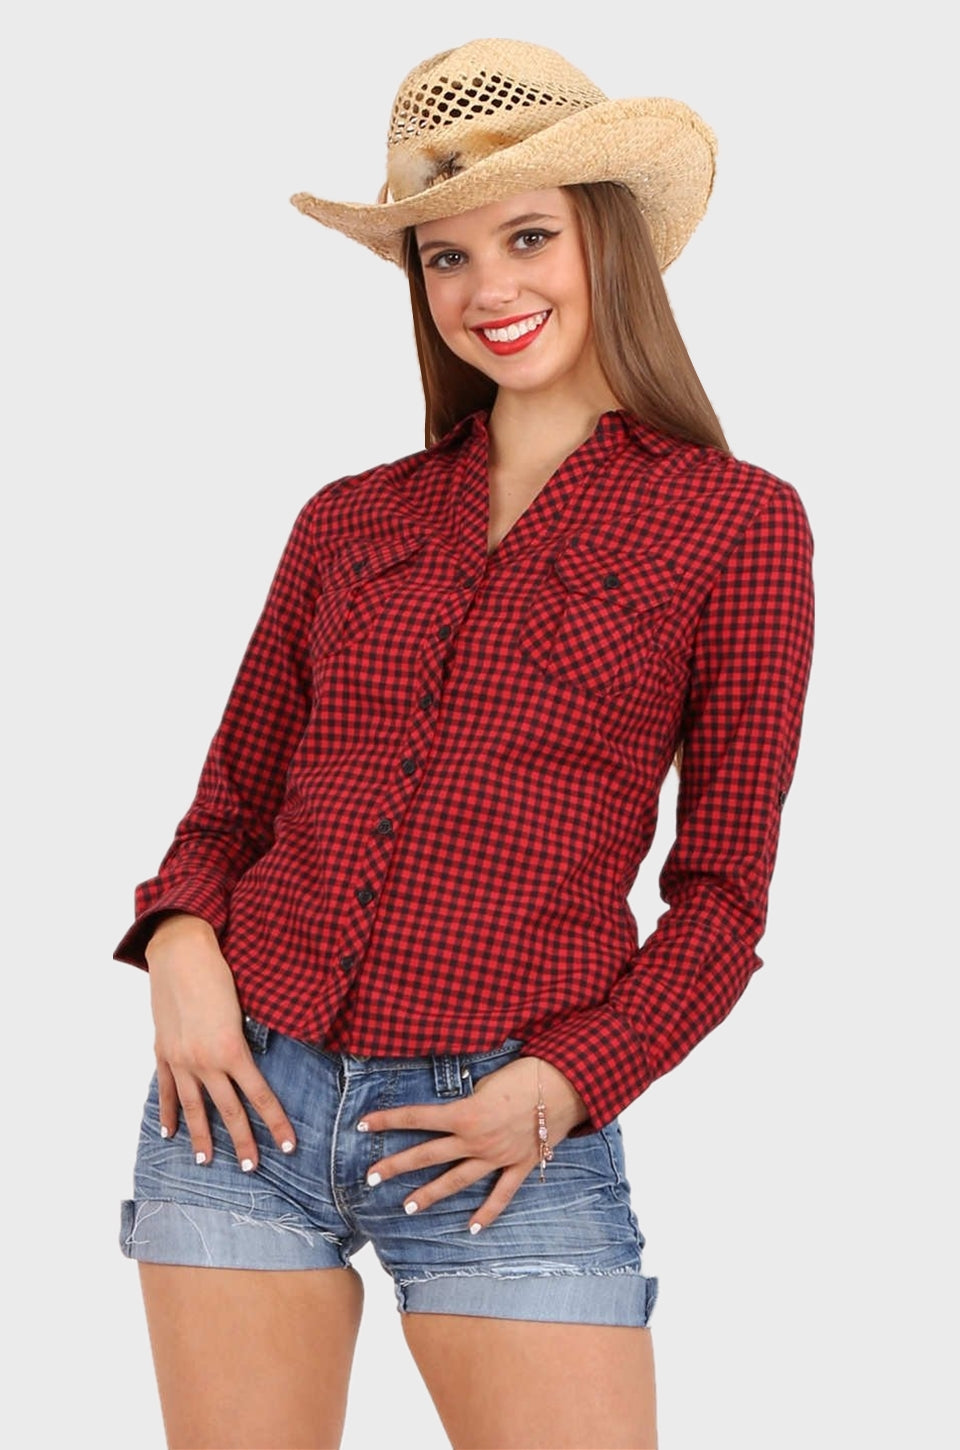 MISS PINKI Talia long sleeve cow girl shirt check shirt - red